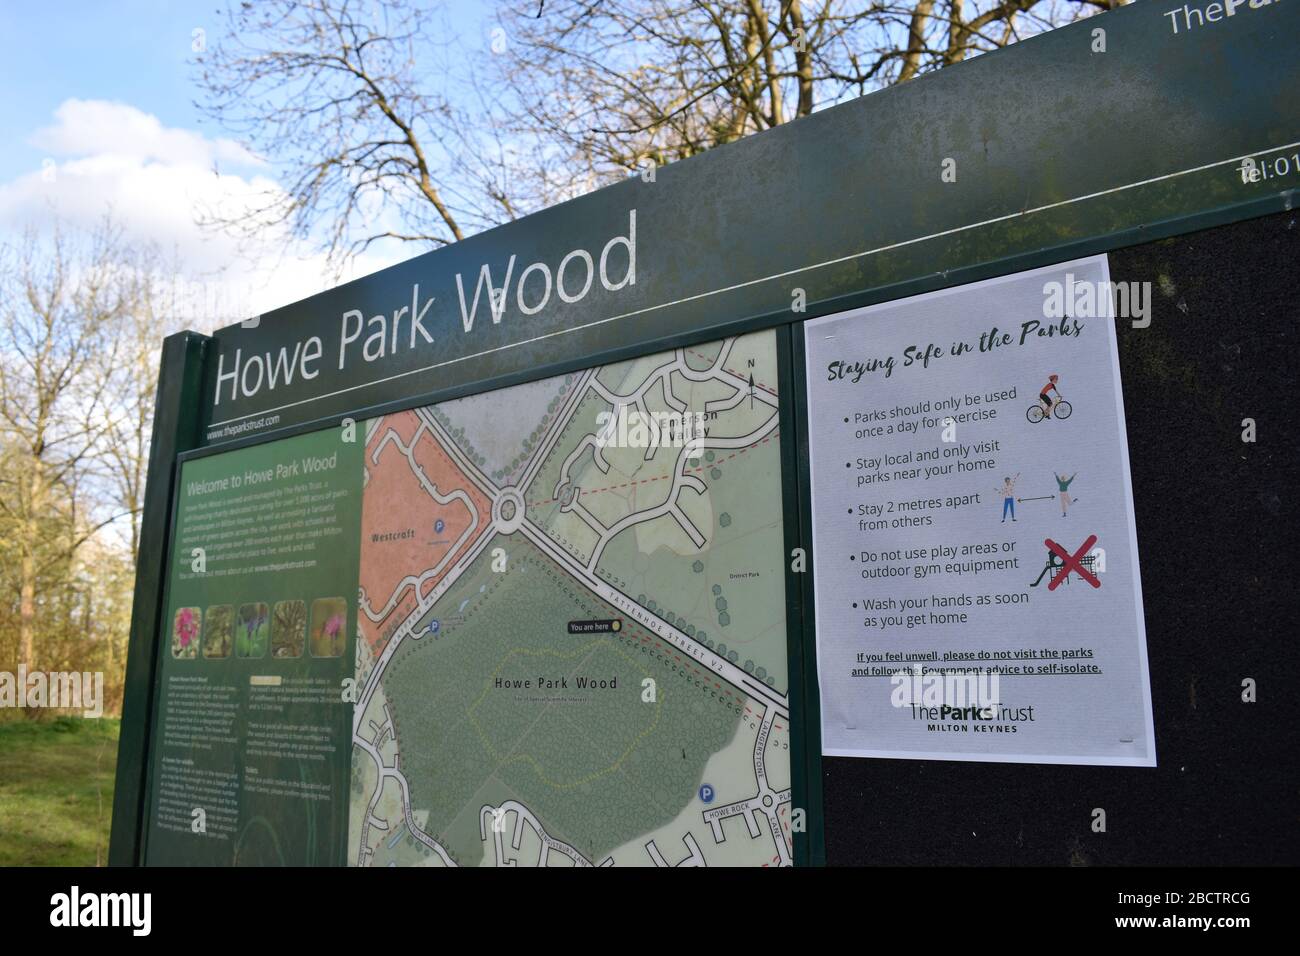 Stare al sicuro nei parchi - avviso a Howe Park Wood a Milton Keynes. Foto Stock